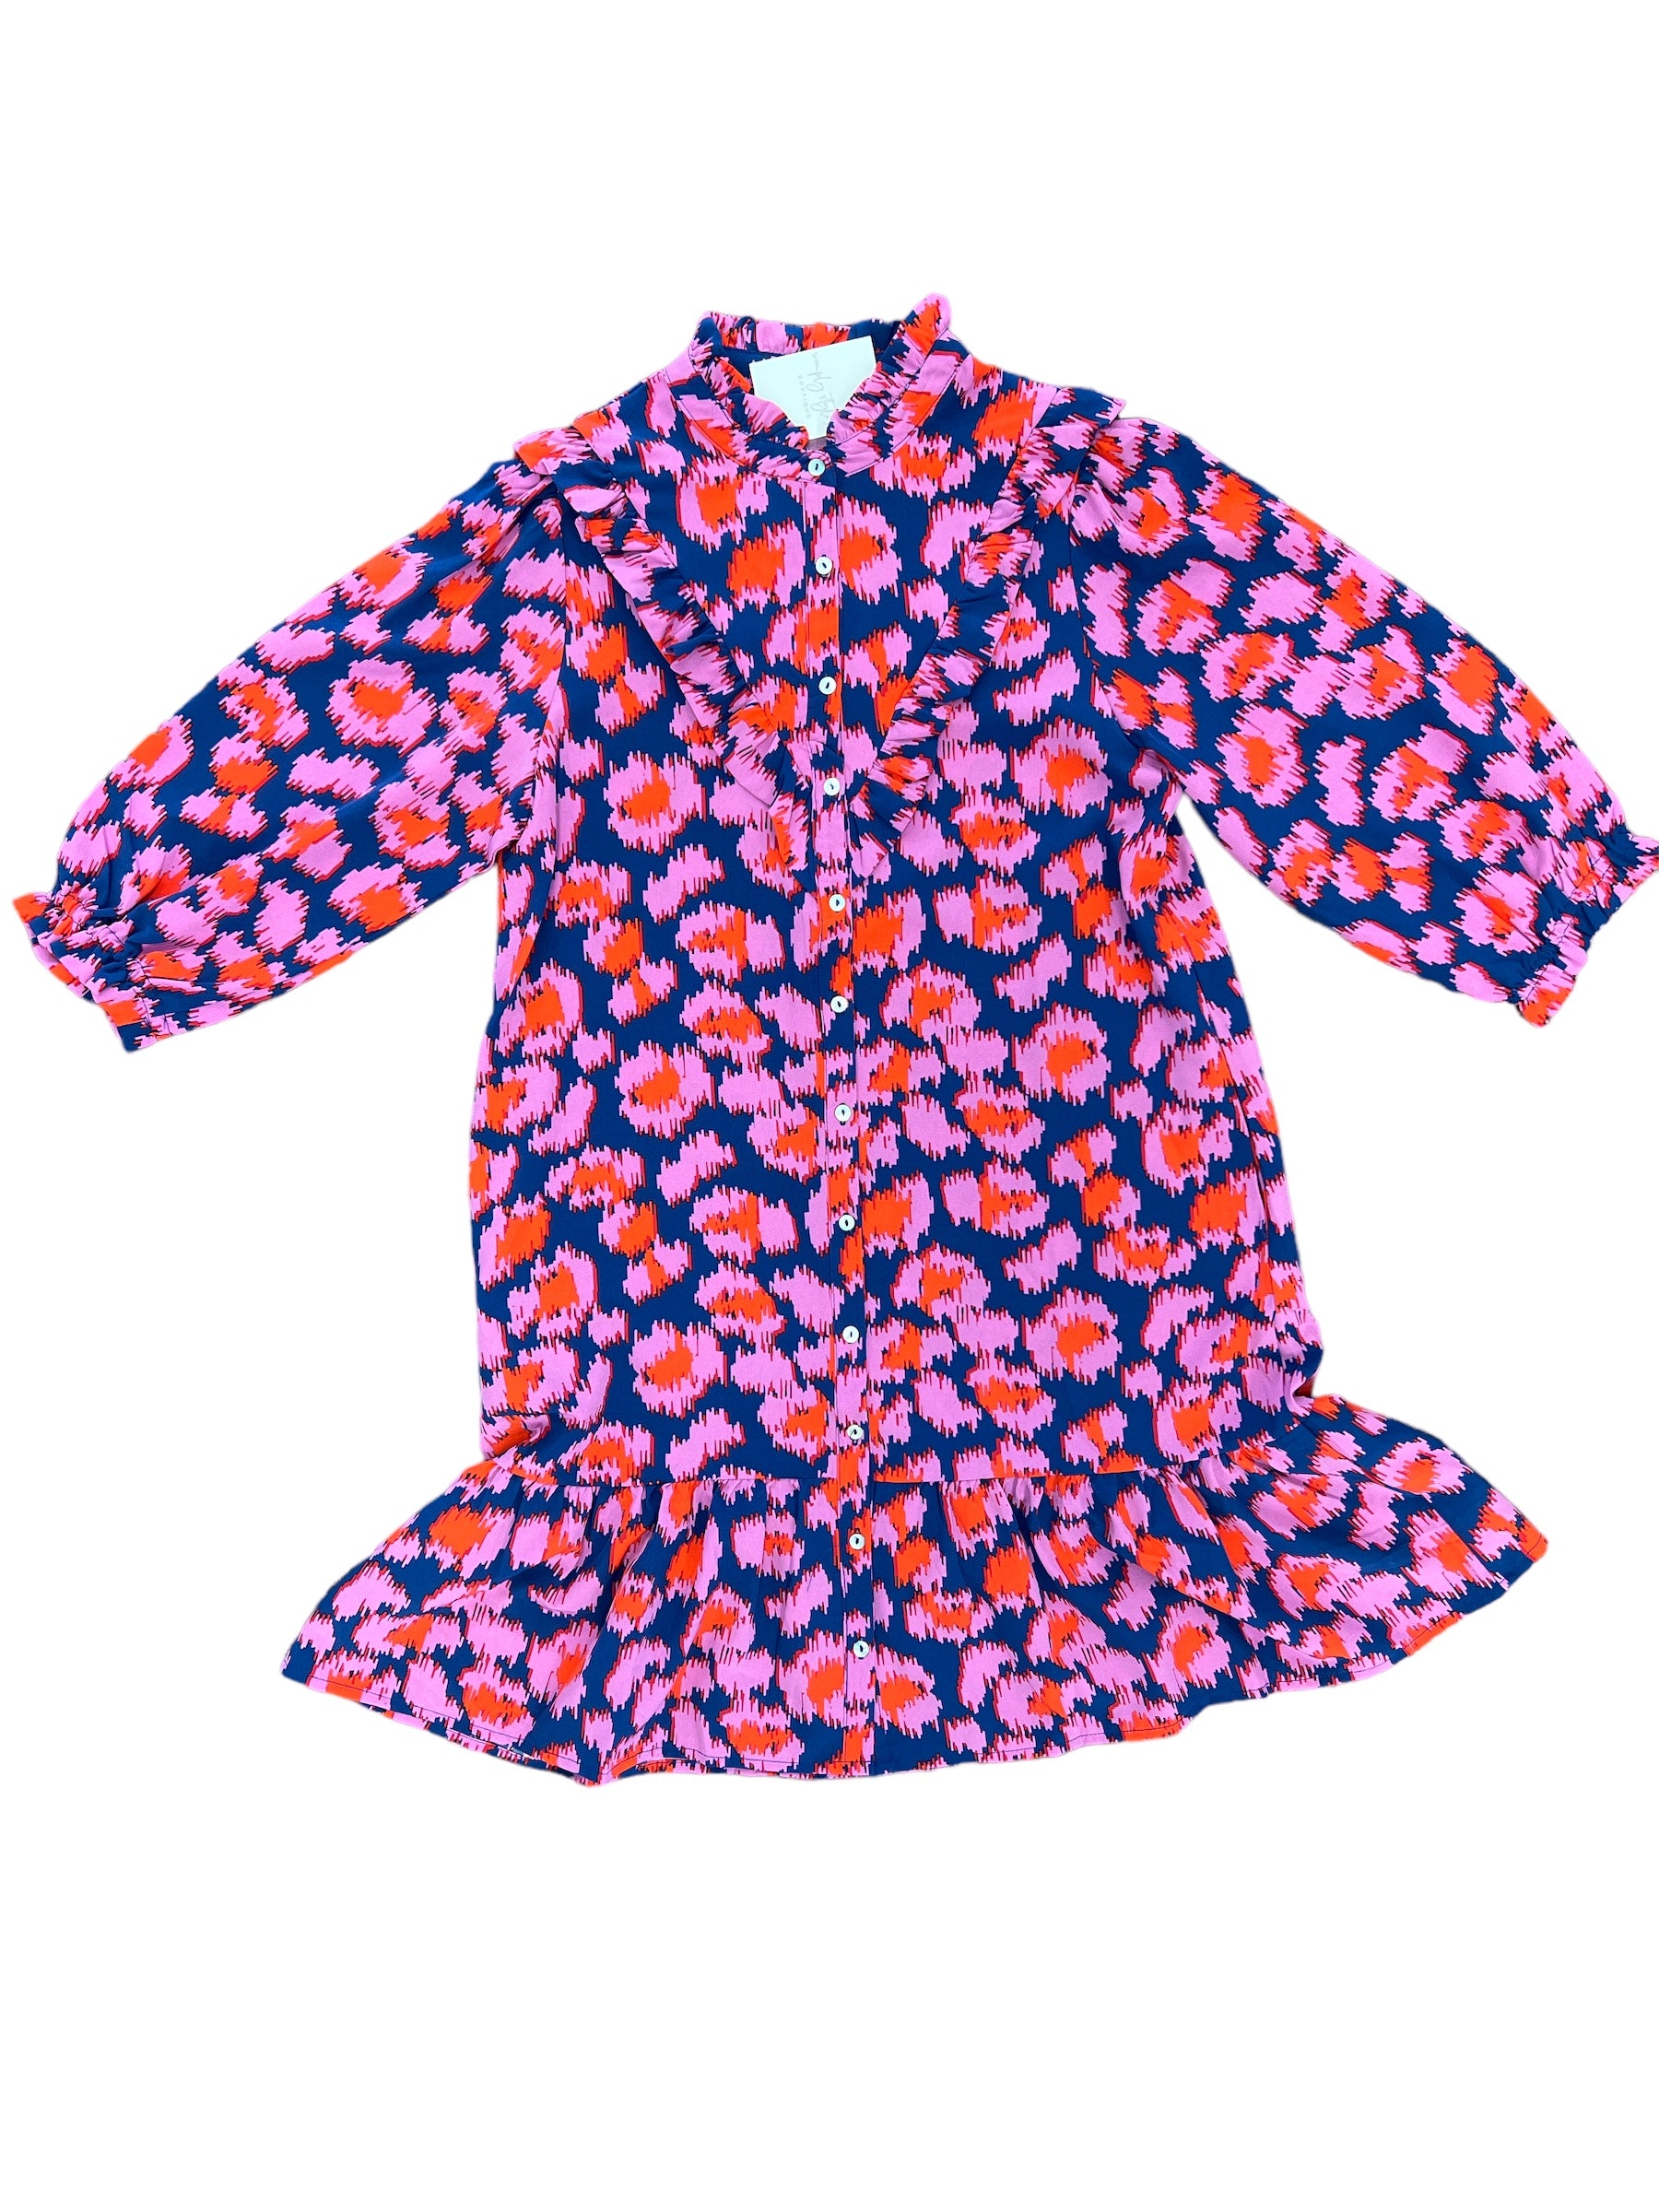 Fancy Like Violet Dress-310 Dresses-Simply Stylish Boutique-Simply Stylish Boutique | Women’s & Kid’s Fashion | Paducah, KY